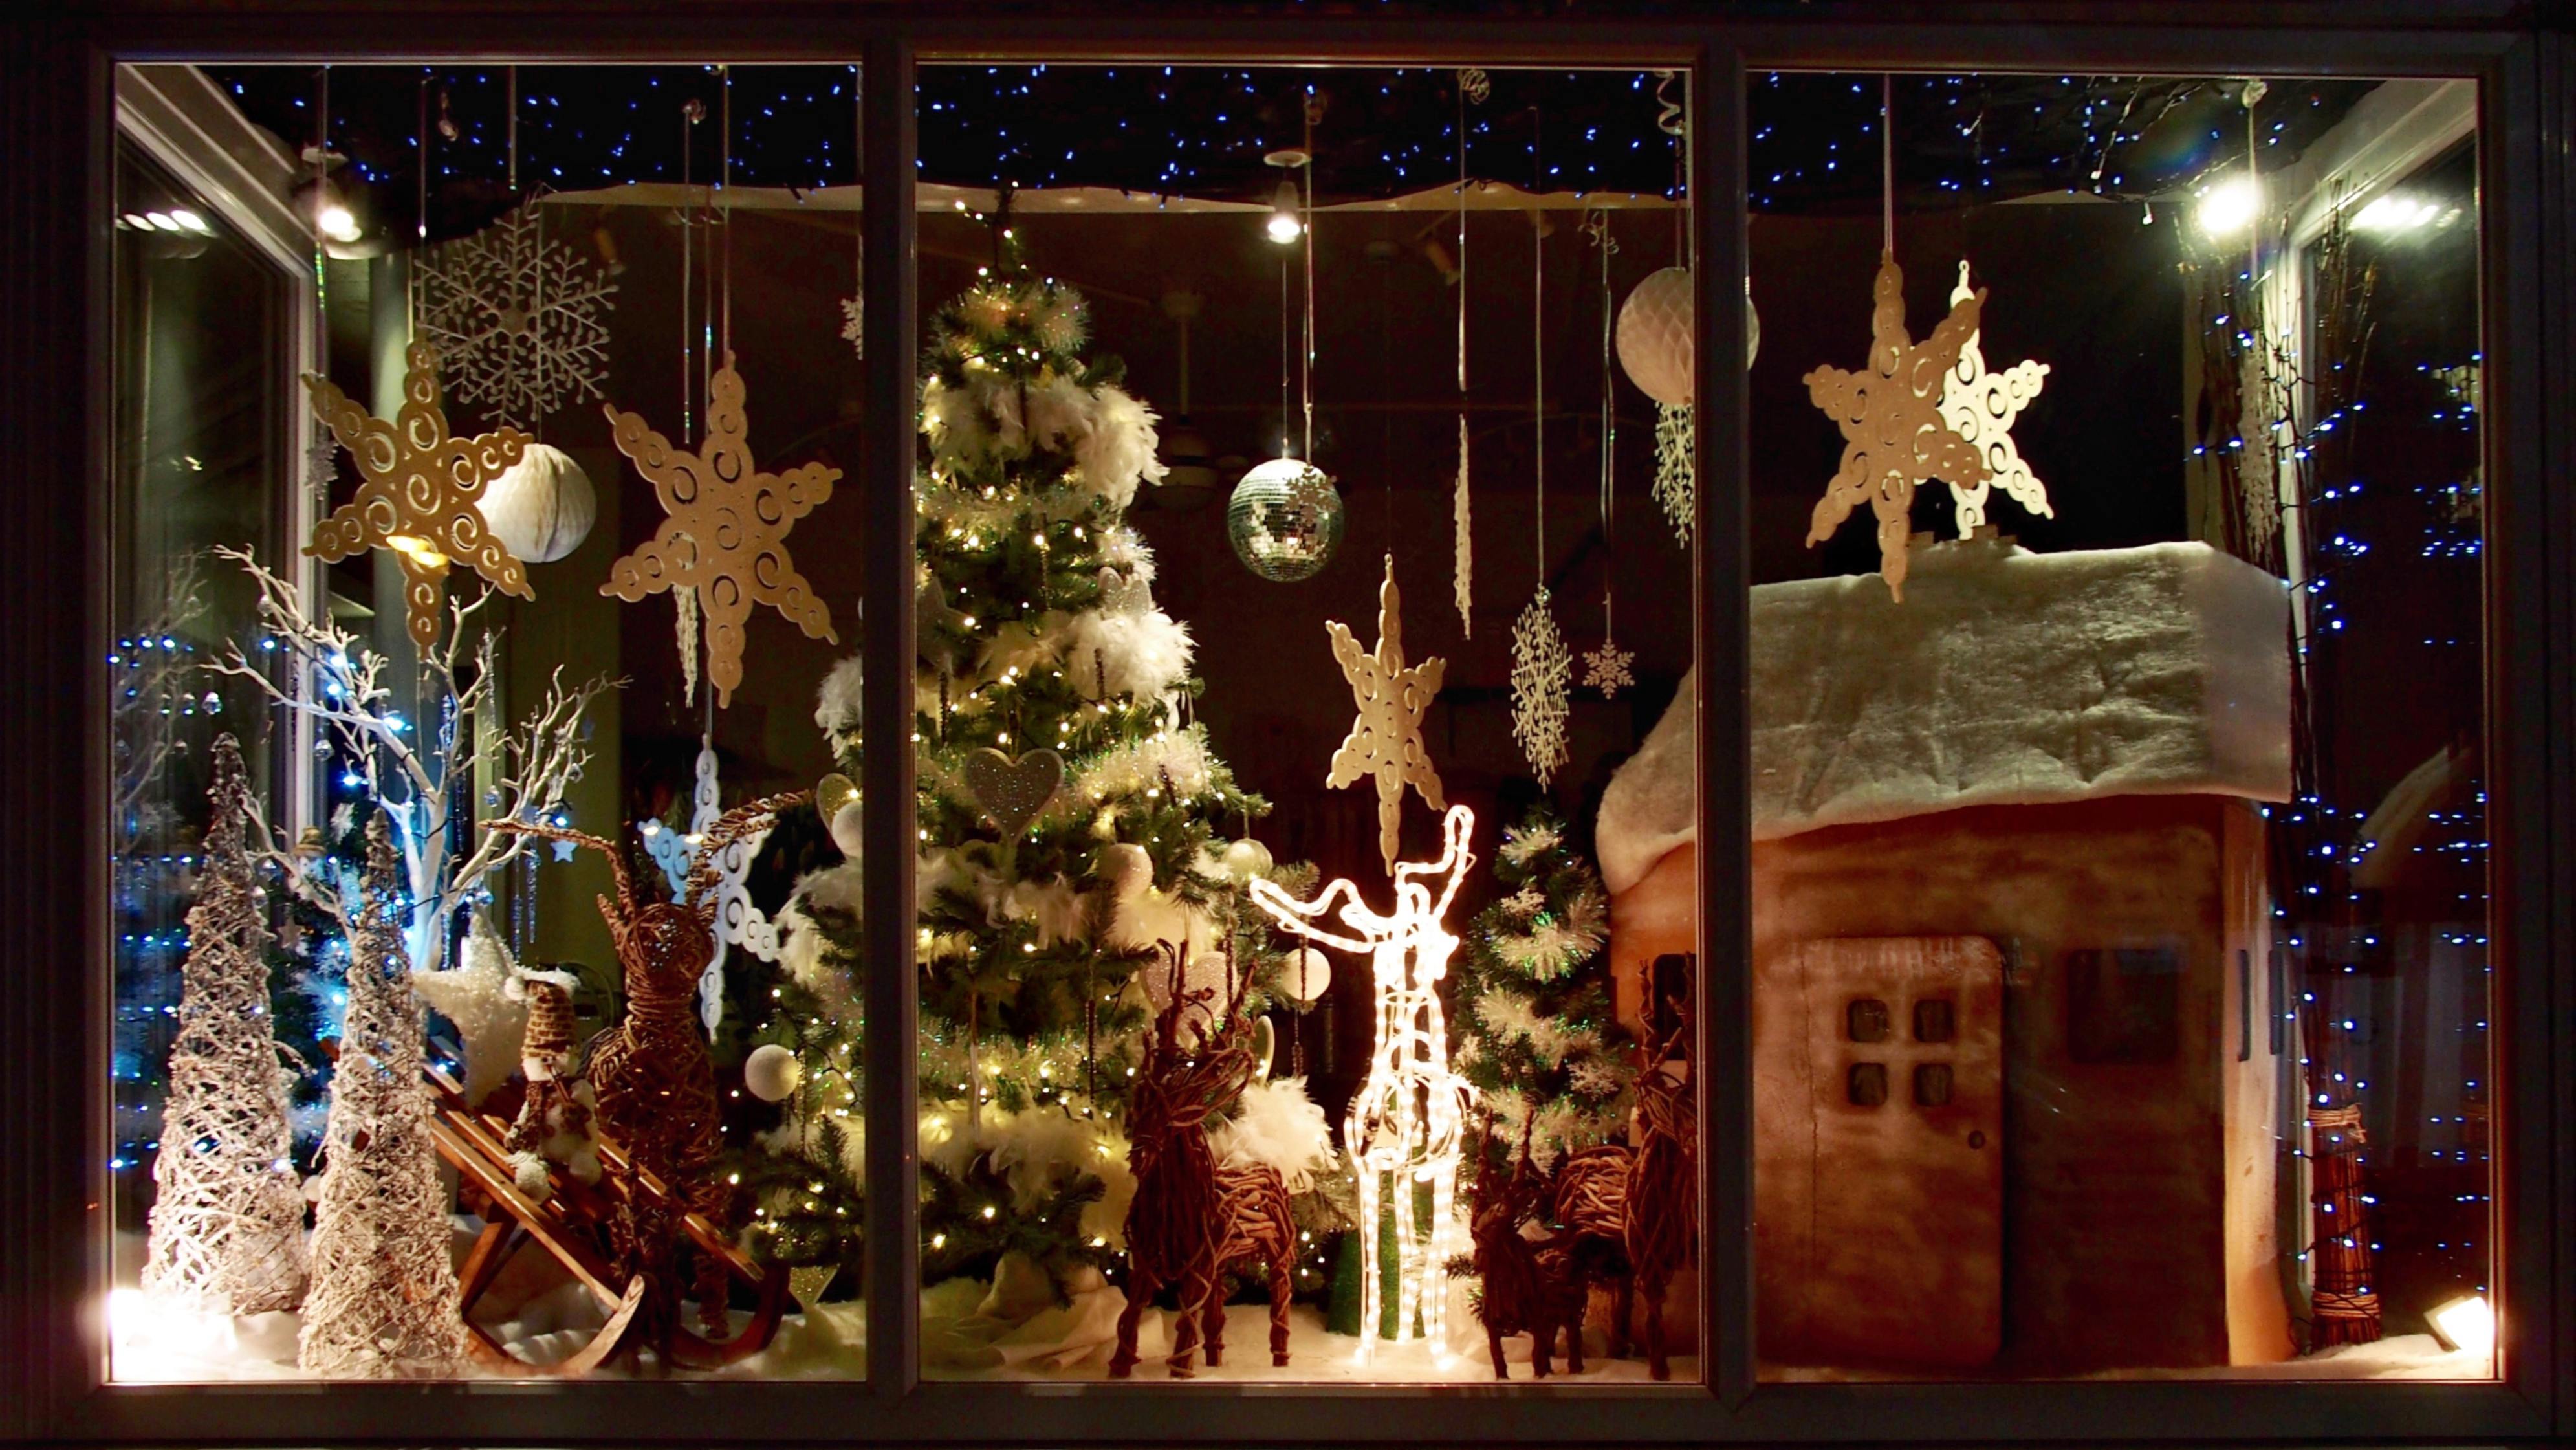 Free stock photo of Christmas Shop Window